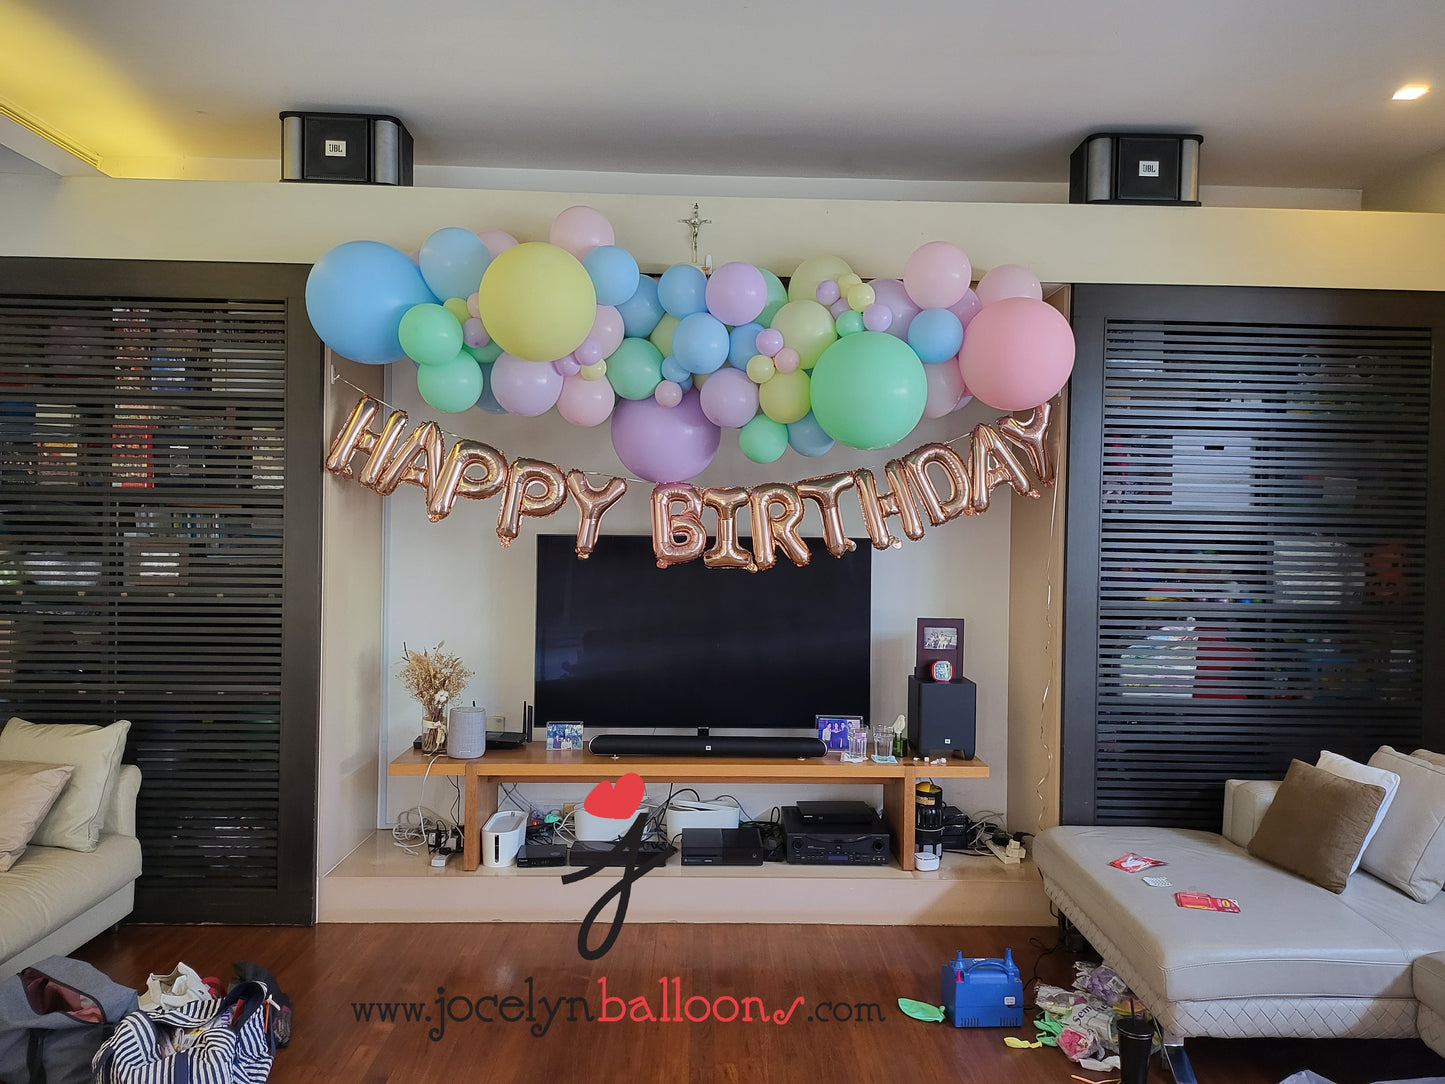 Pastel Rainbow Organic Garland + Ice Cream Display + Foil Happy Birthday Balloons